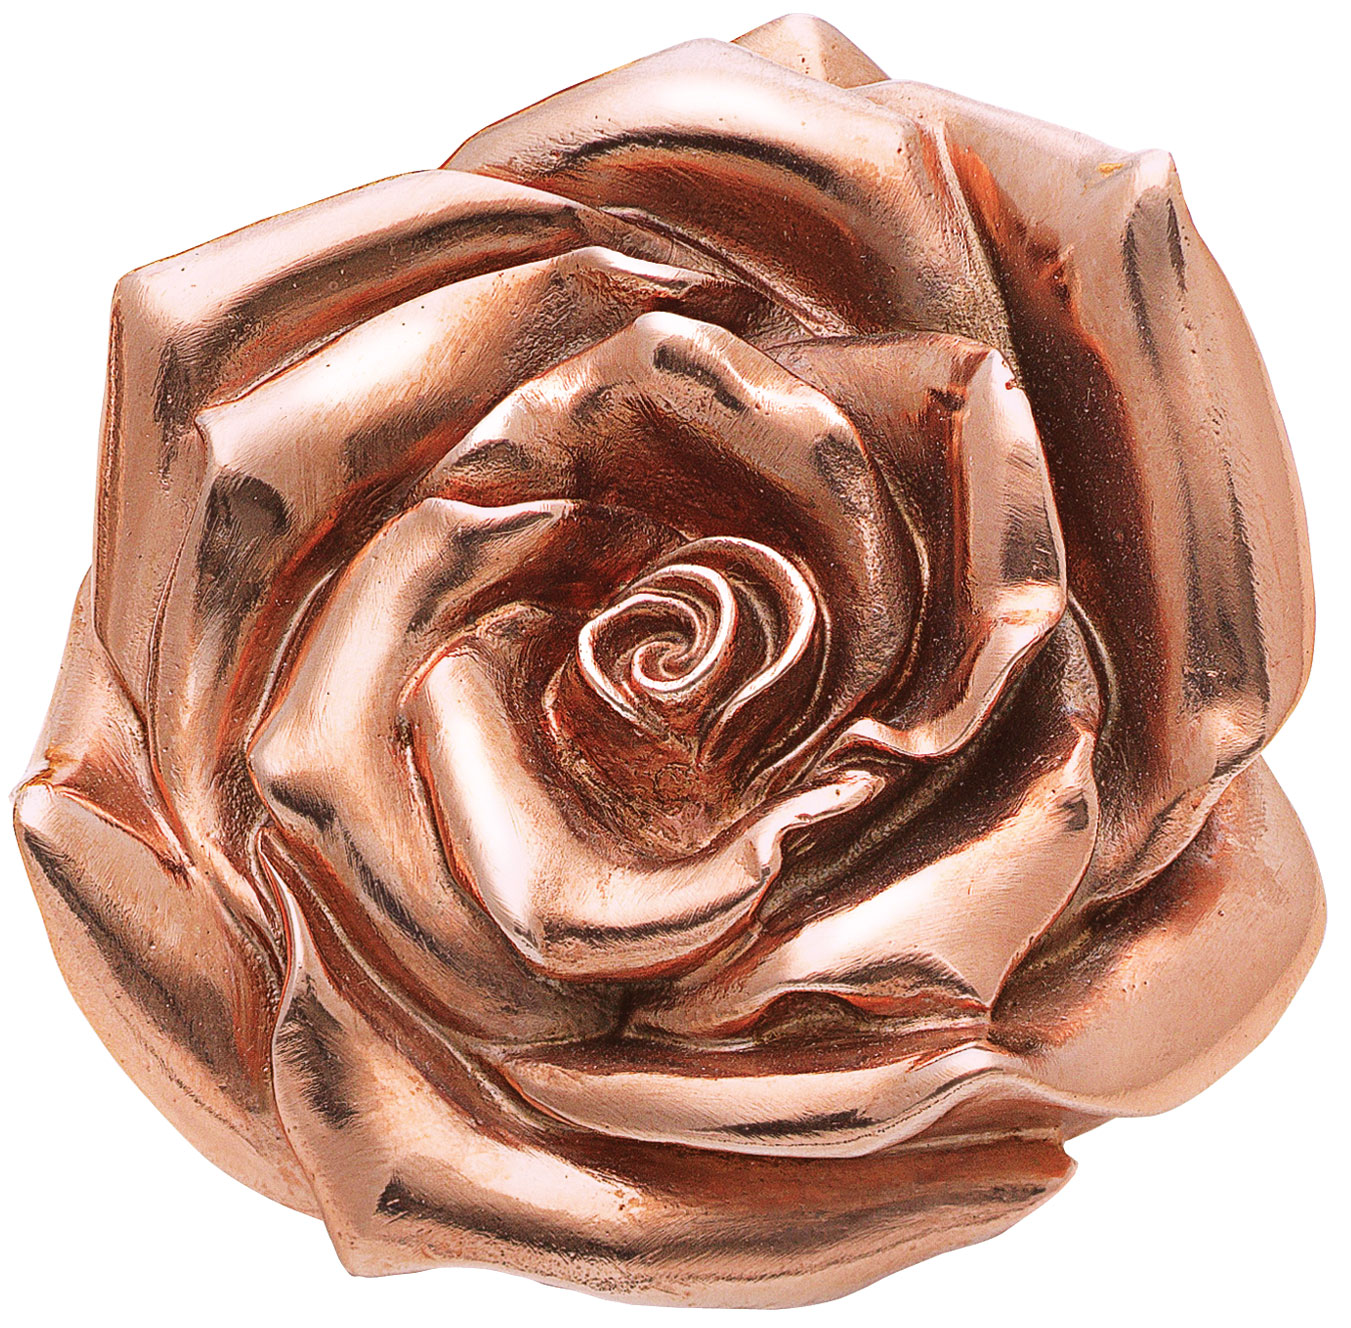 Ottmar Hörl: Skulptur 'Rose' (2012), Version rosévergoldet